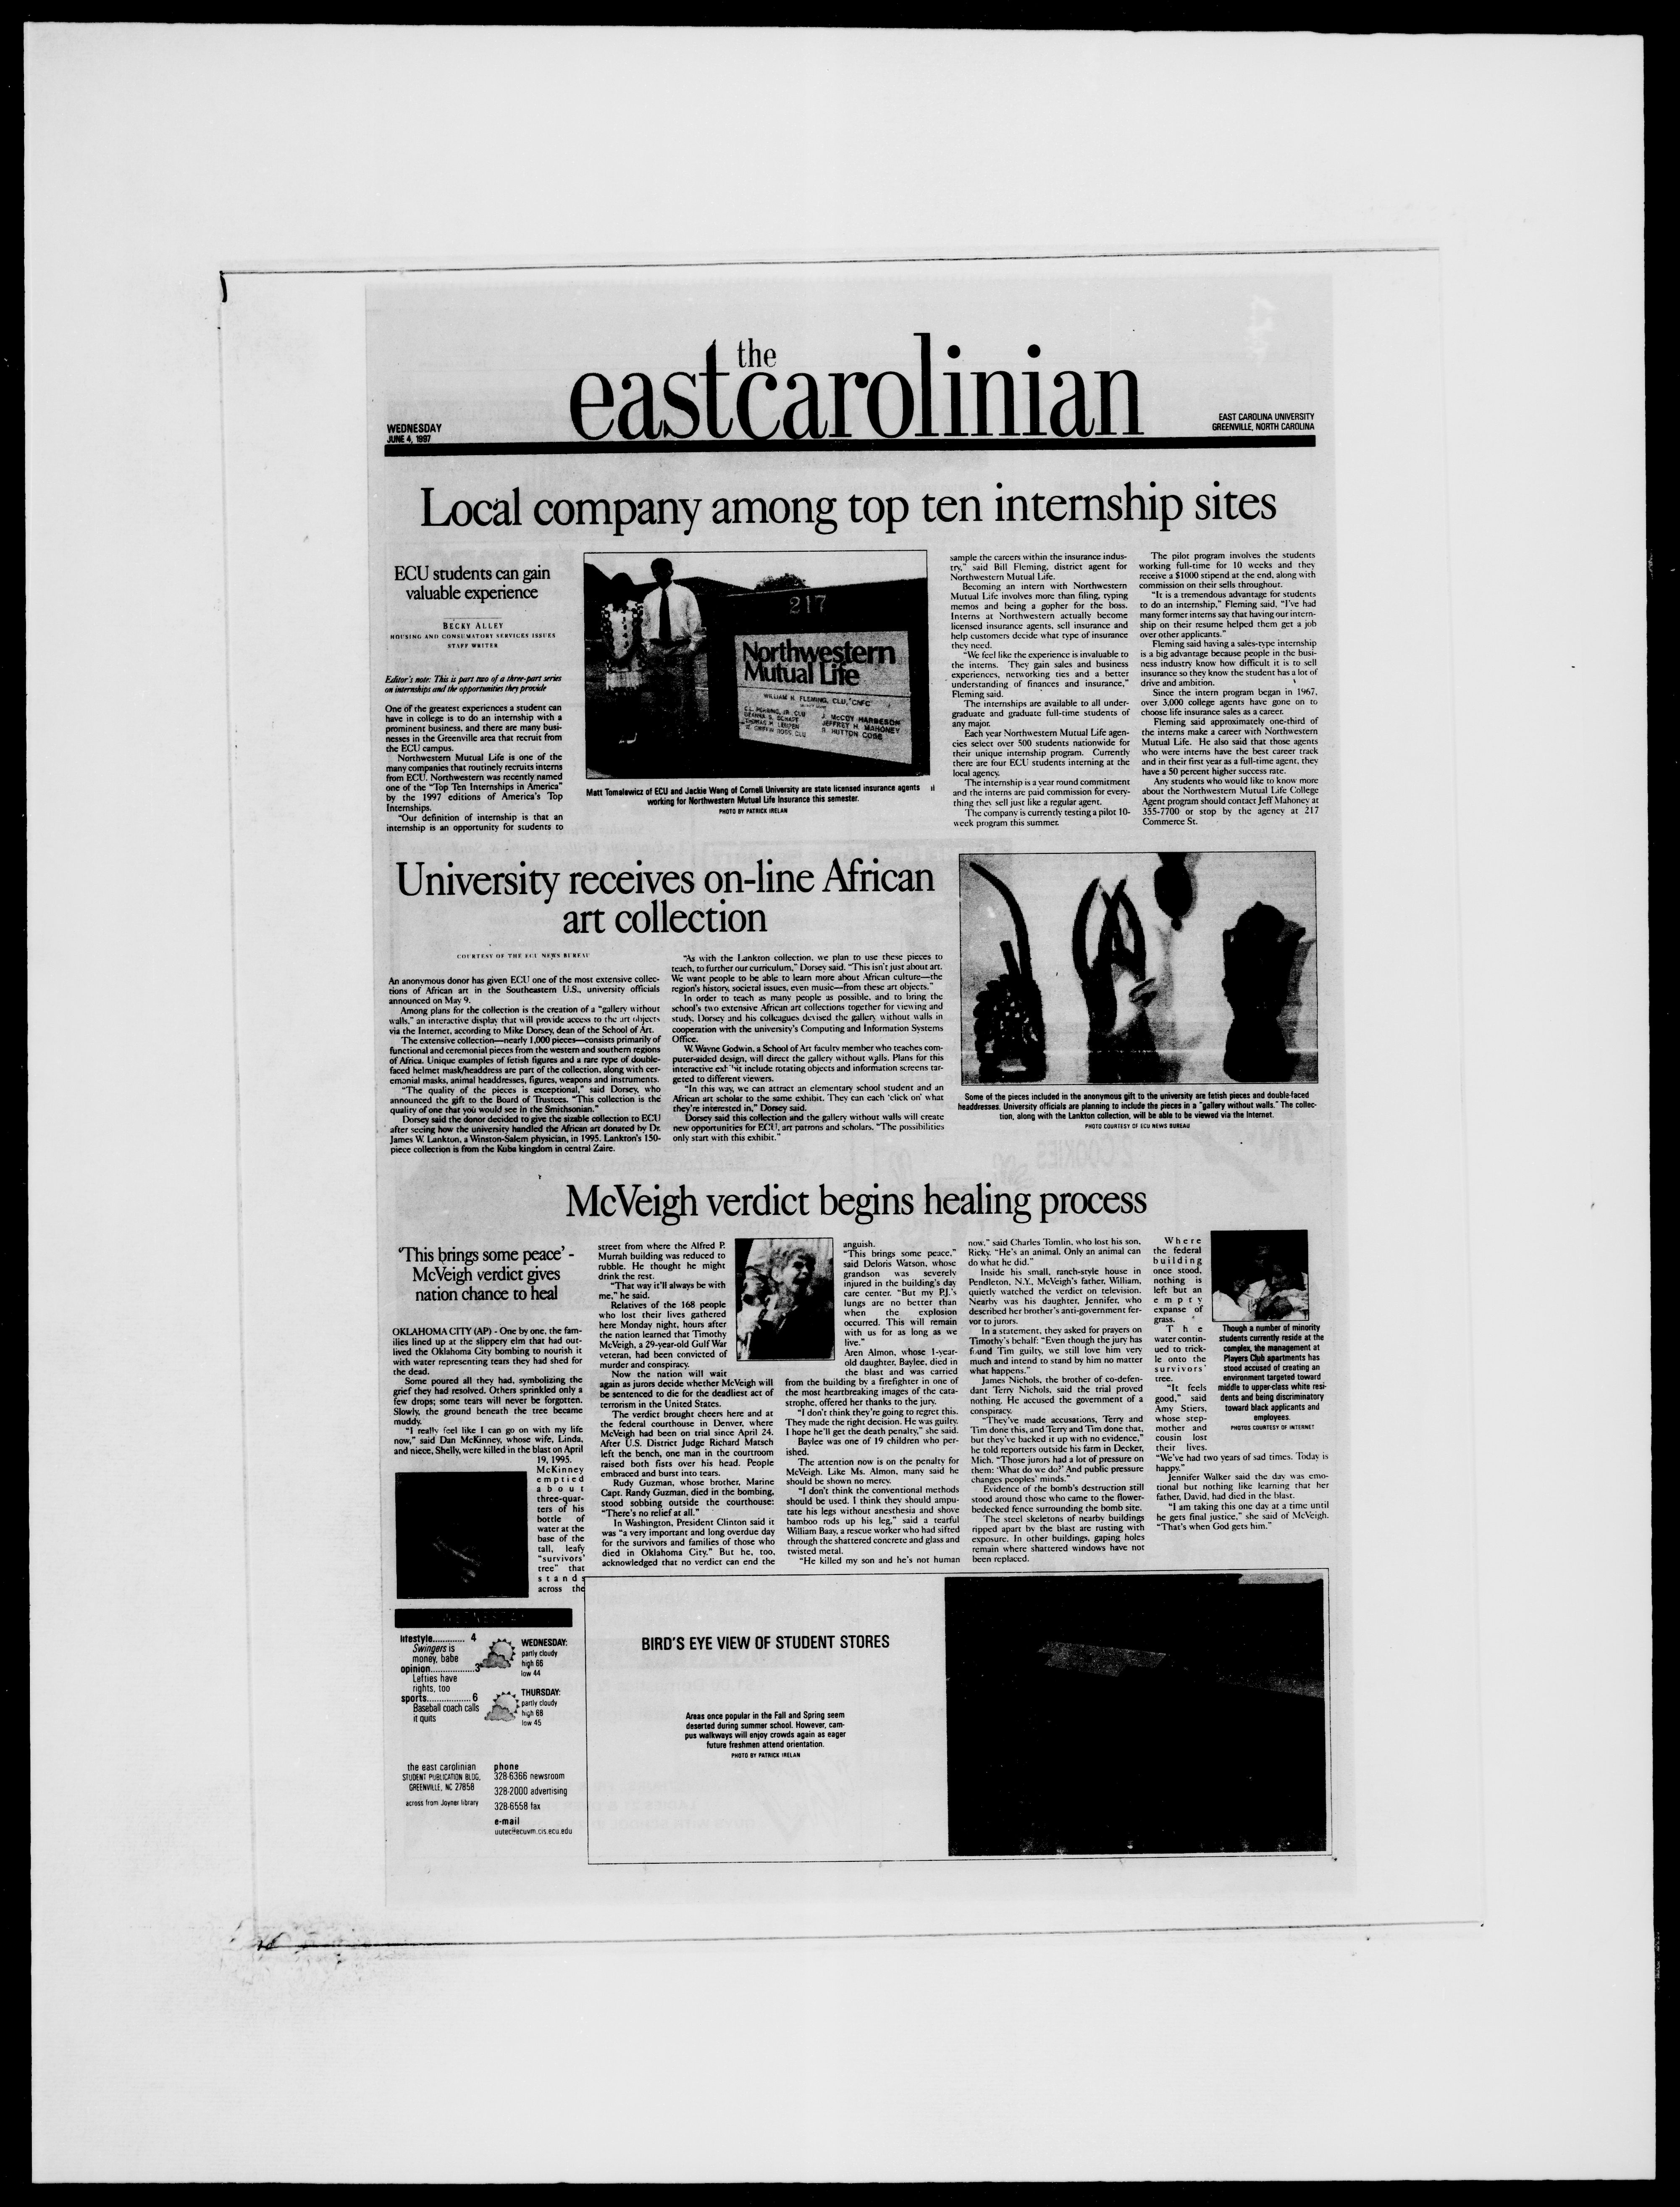 The East Carolinian, June 4, 1997 image